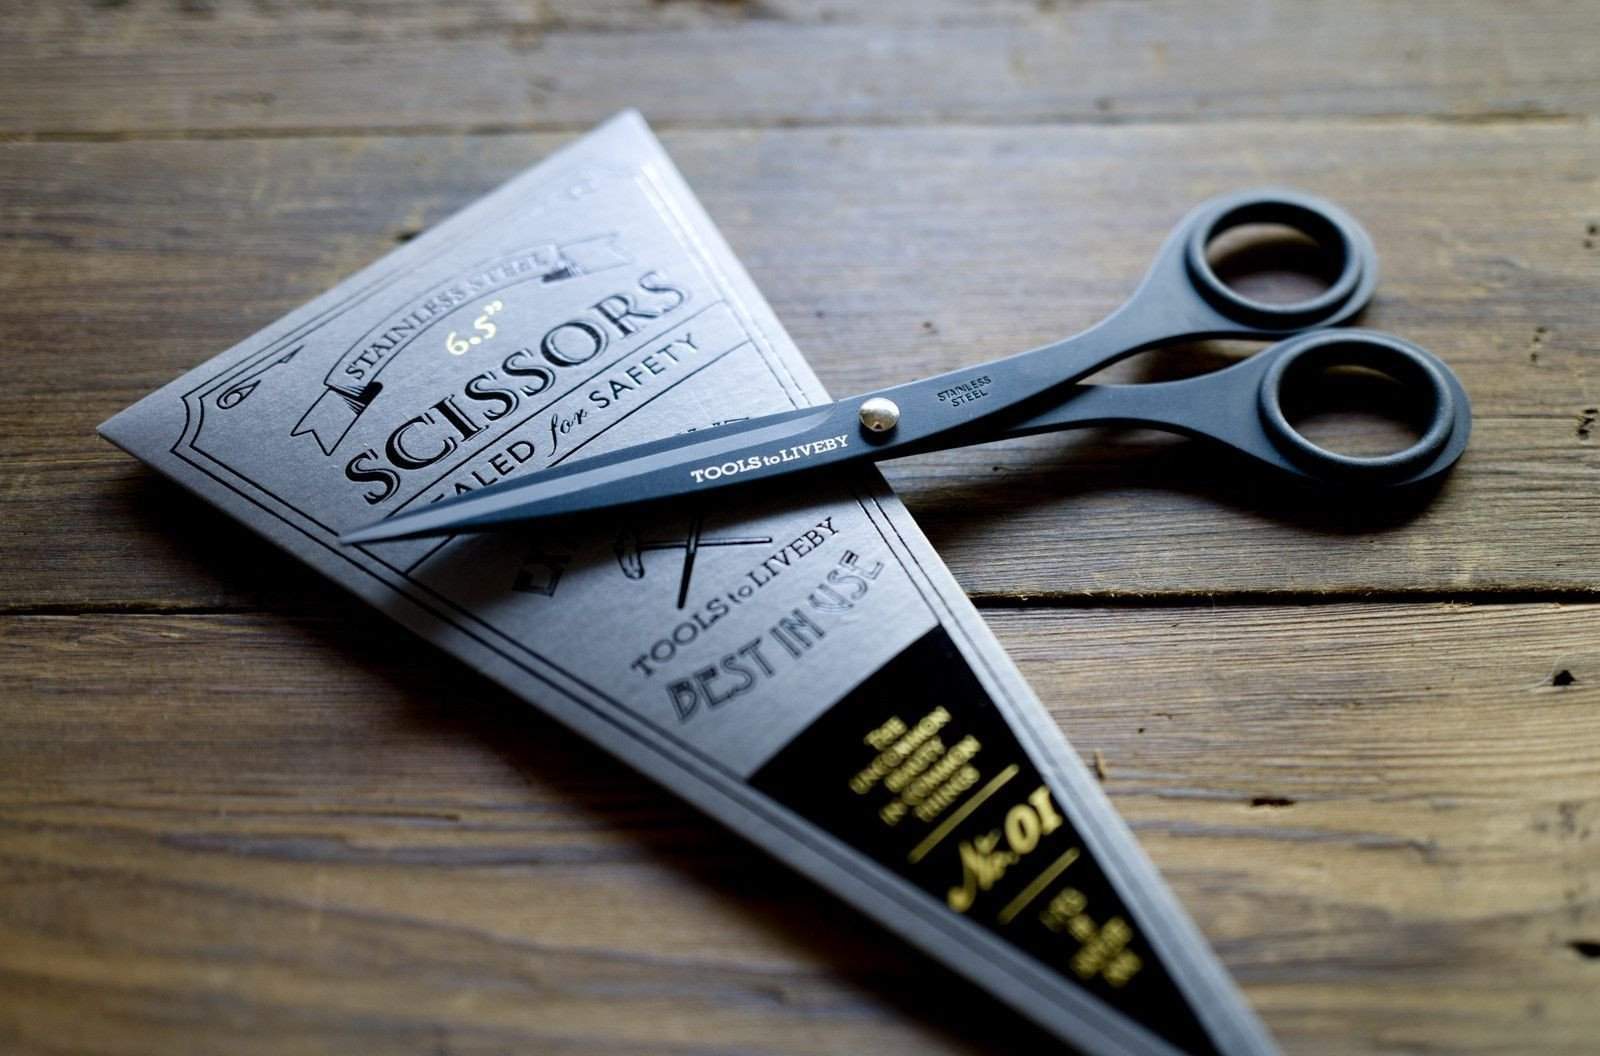 Tools to Liveby 3 Scissors - Teflon Black